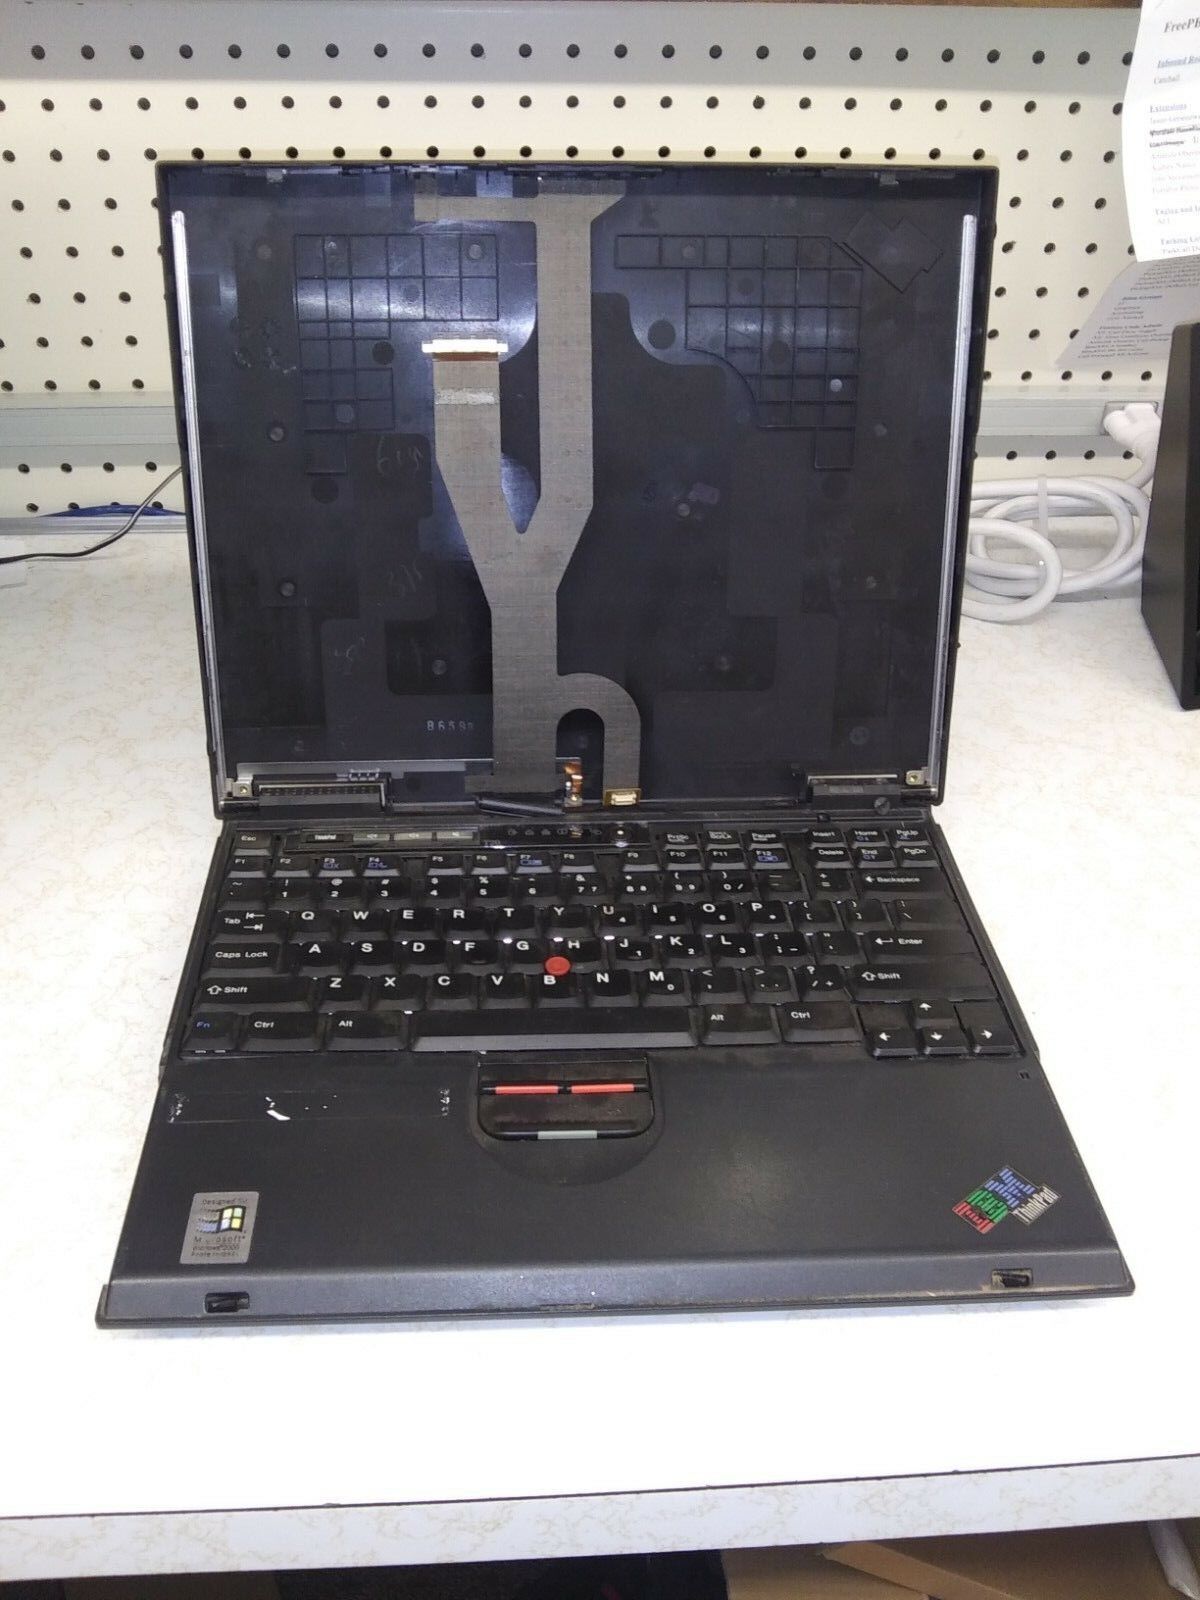 IBM Thinkpad T20 Laptop